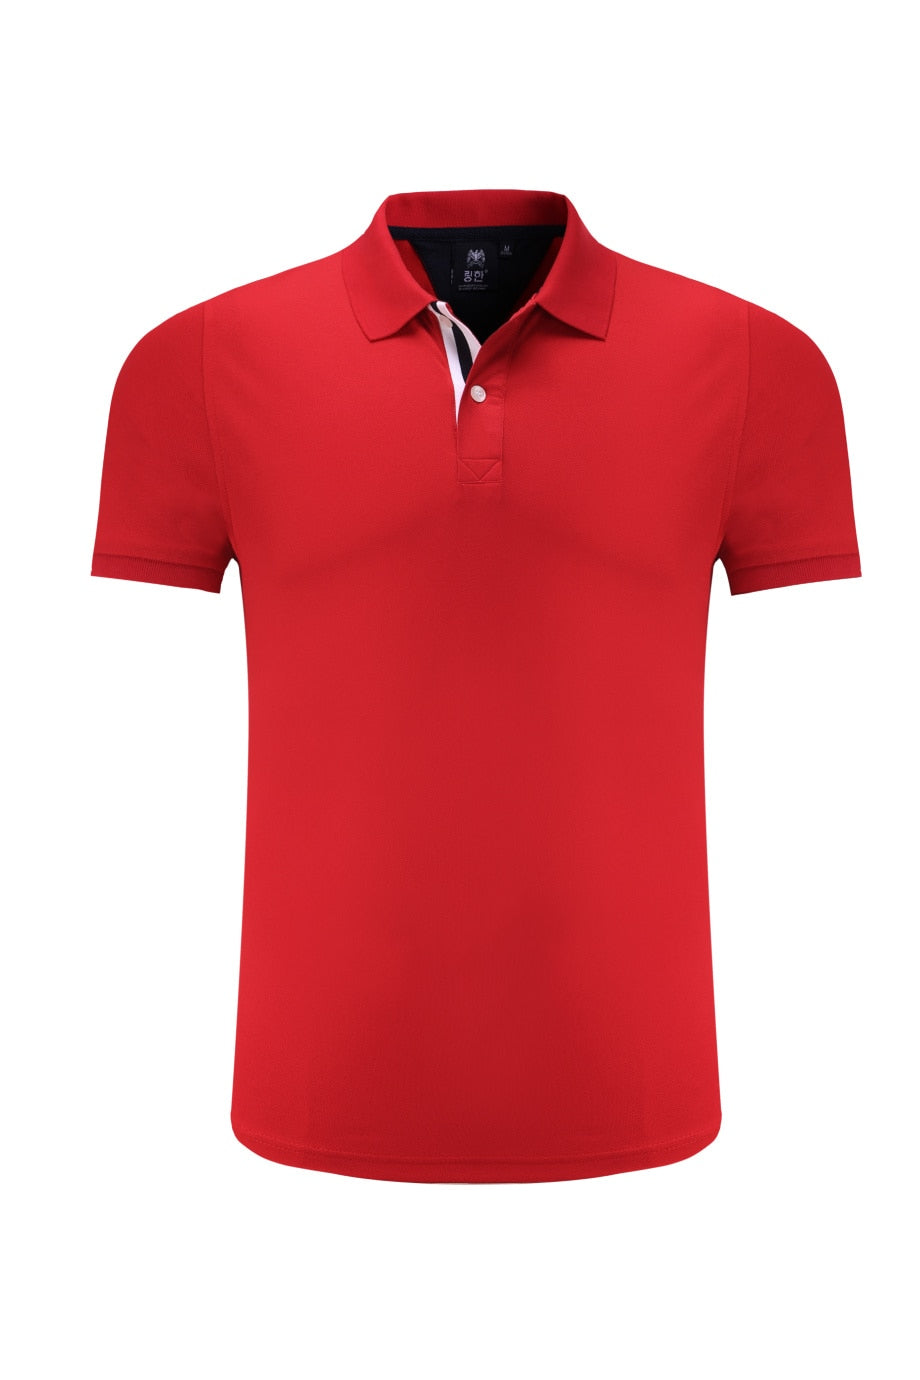 Golf Short Sleeve Training Fitness Summer Turn-down Collar Polo T shirt The Clothing Company Sydney